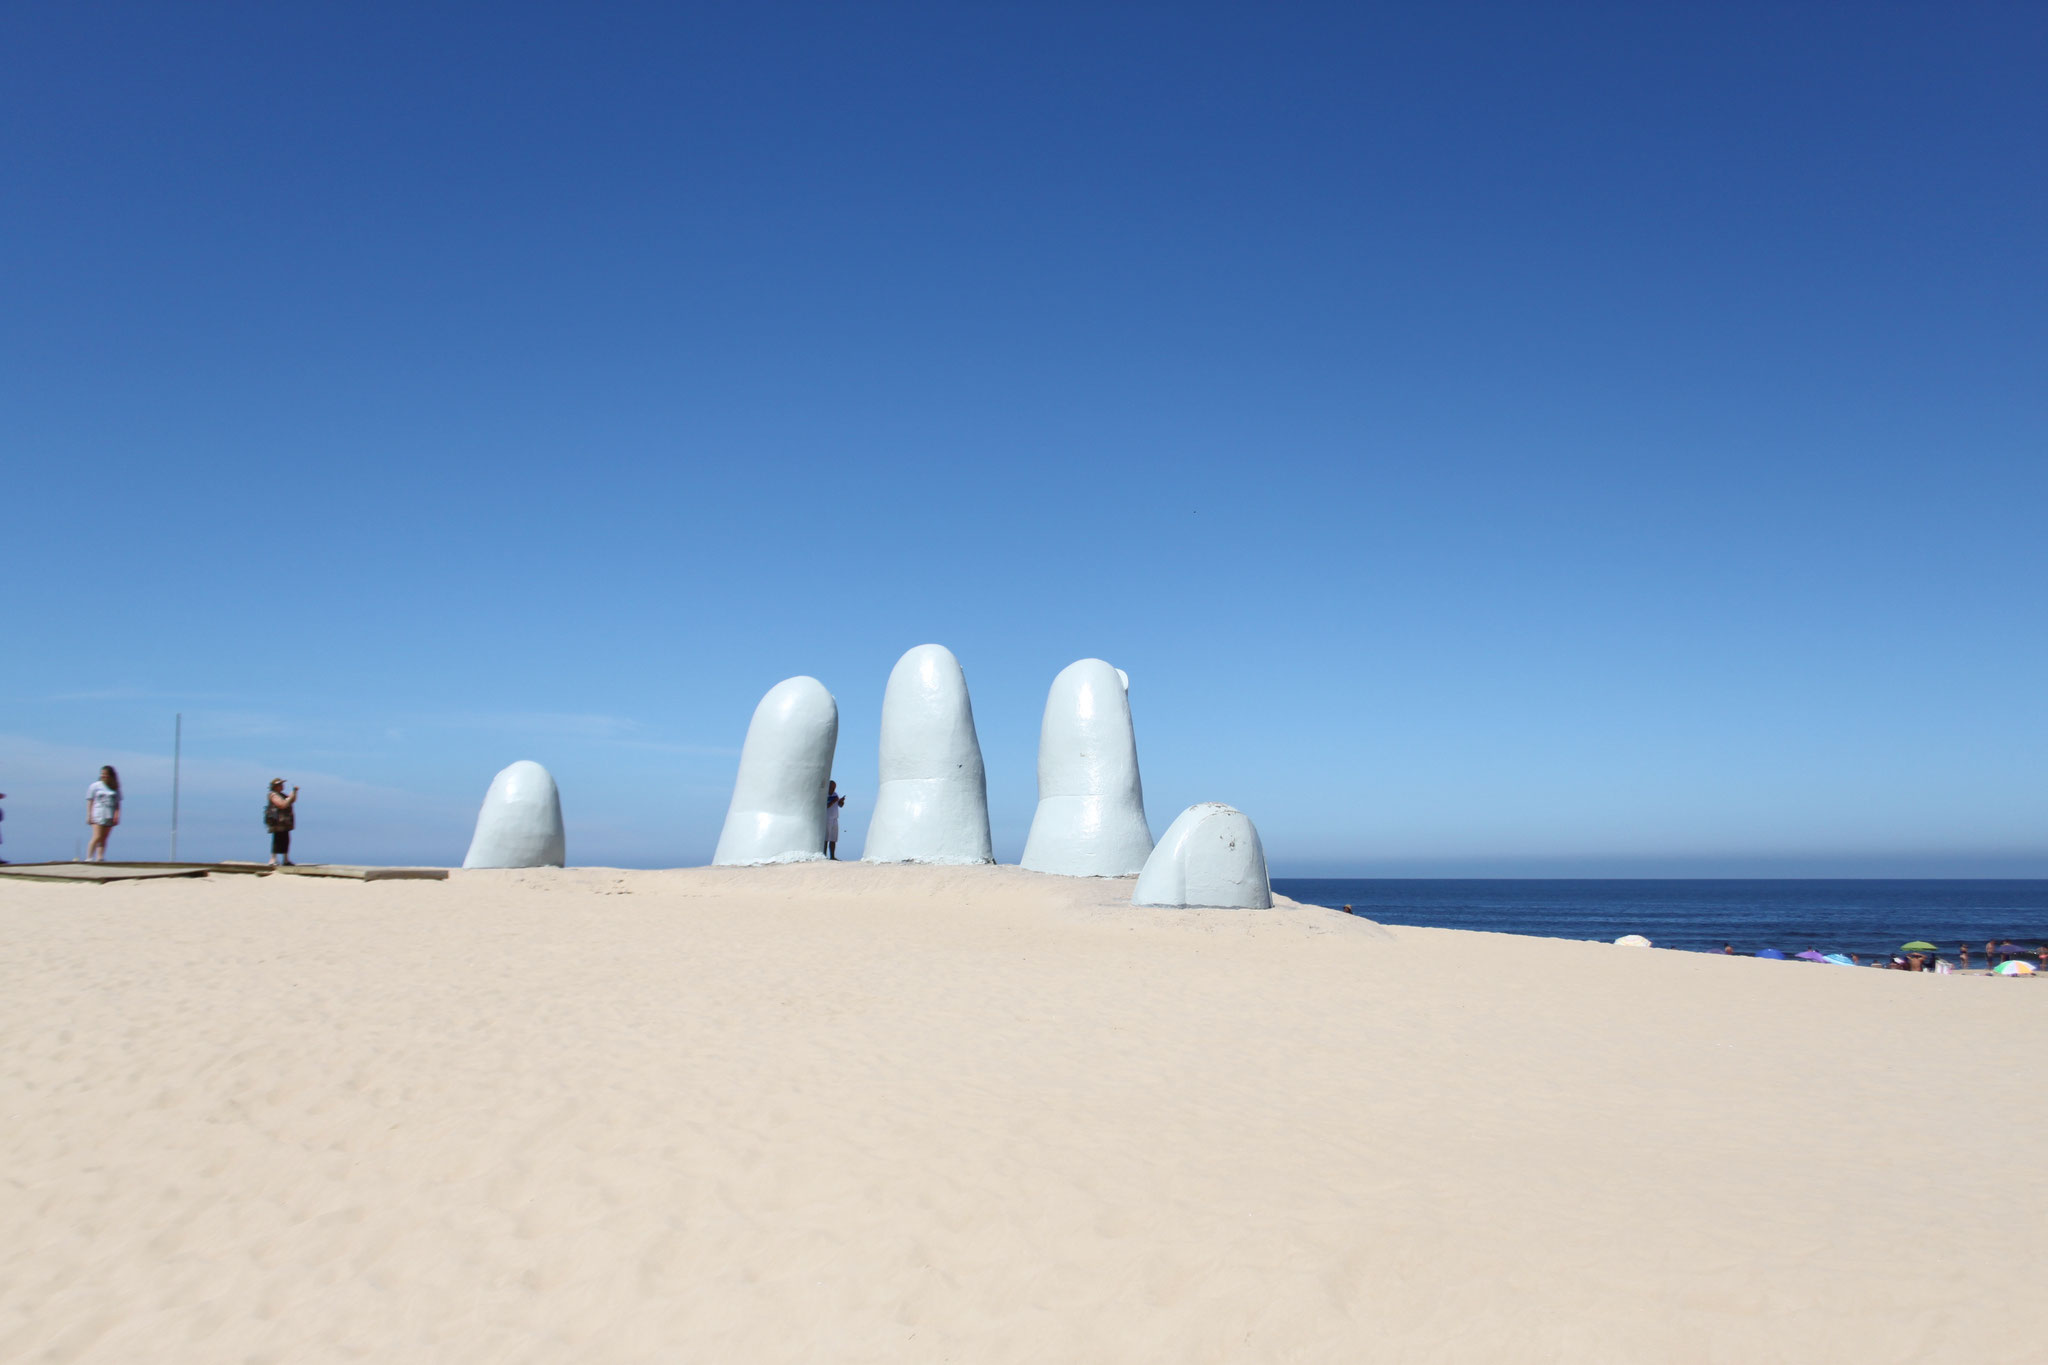 La Mano (The Hand) is a sculpture in Punta del Este by Chilean artist Mario Irarrázabal